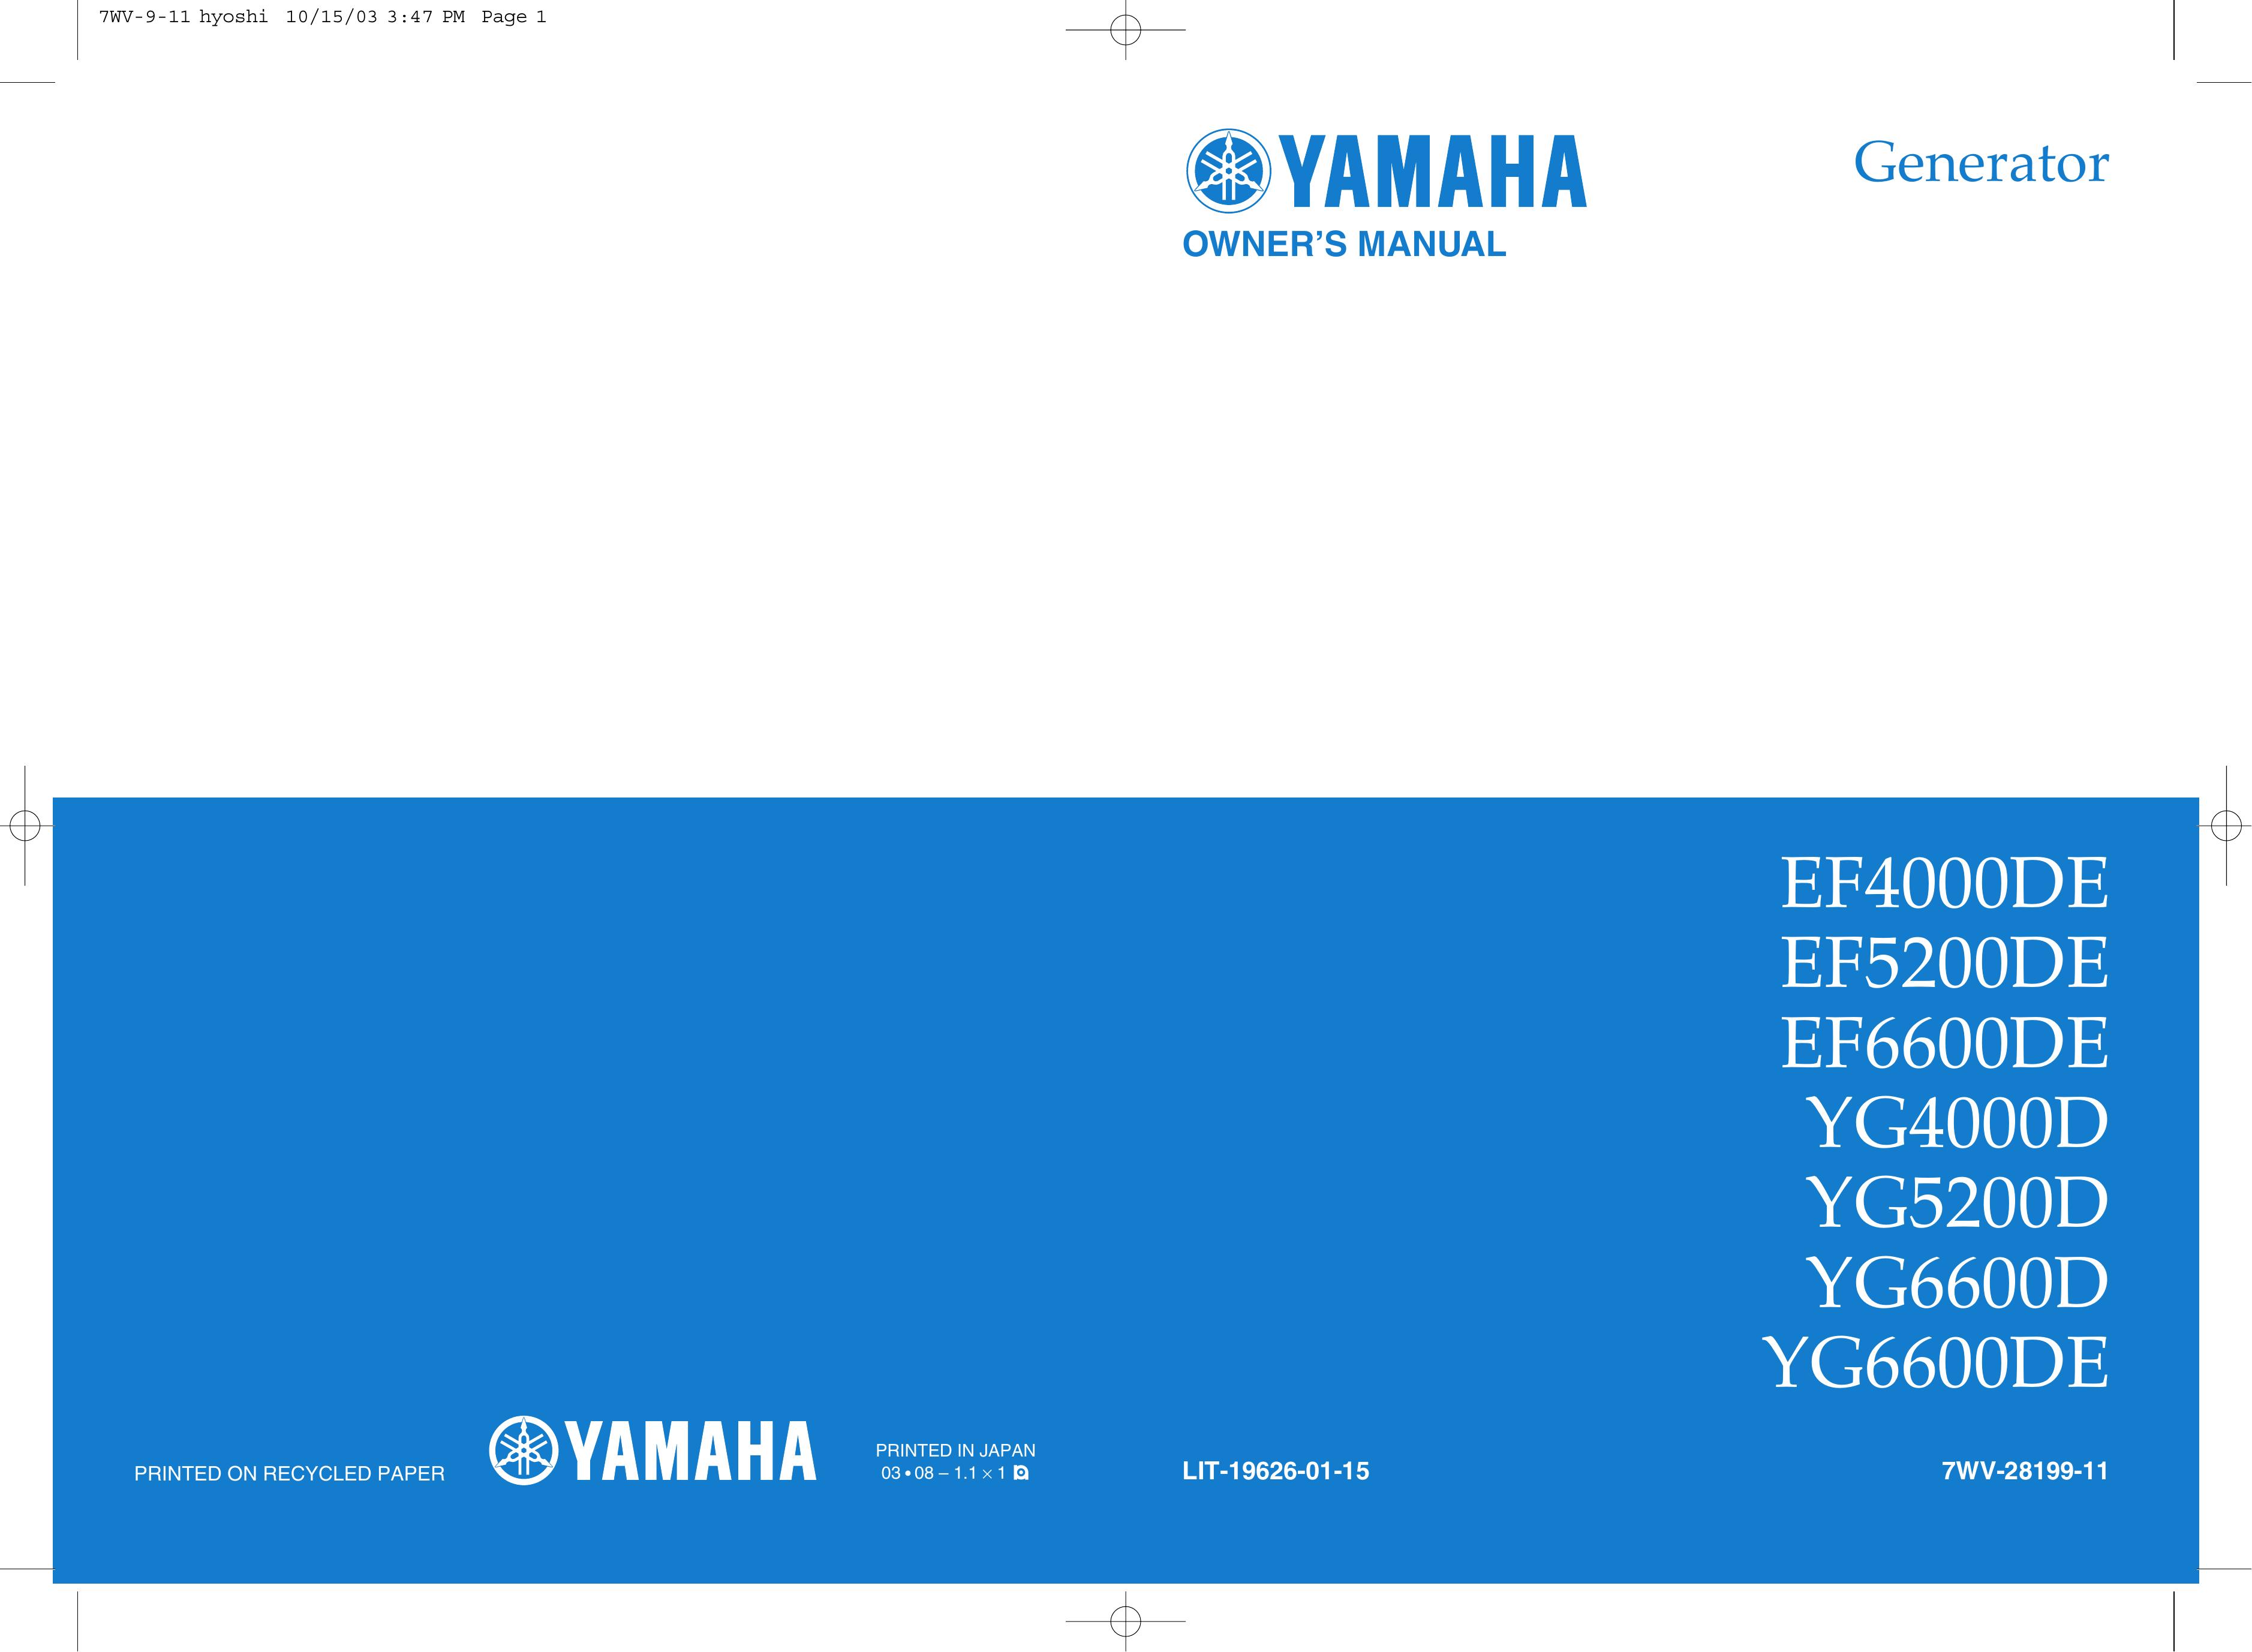 Yamaha YG6600D Portable Generator User Manual